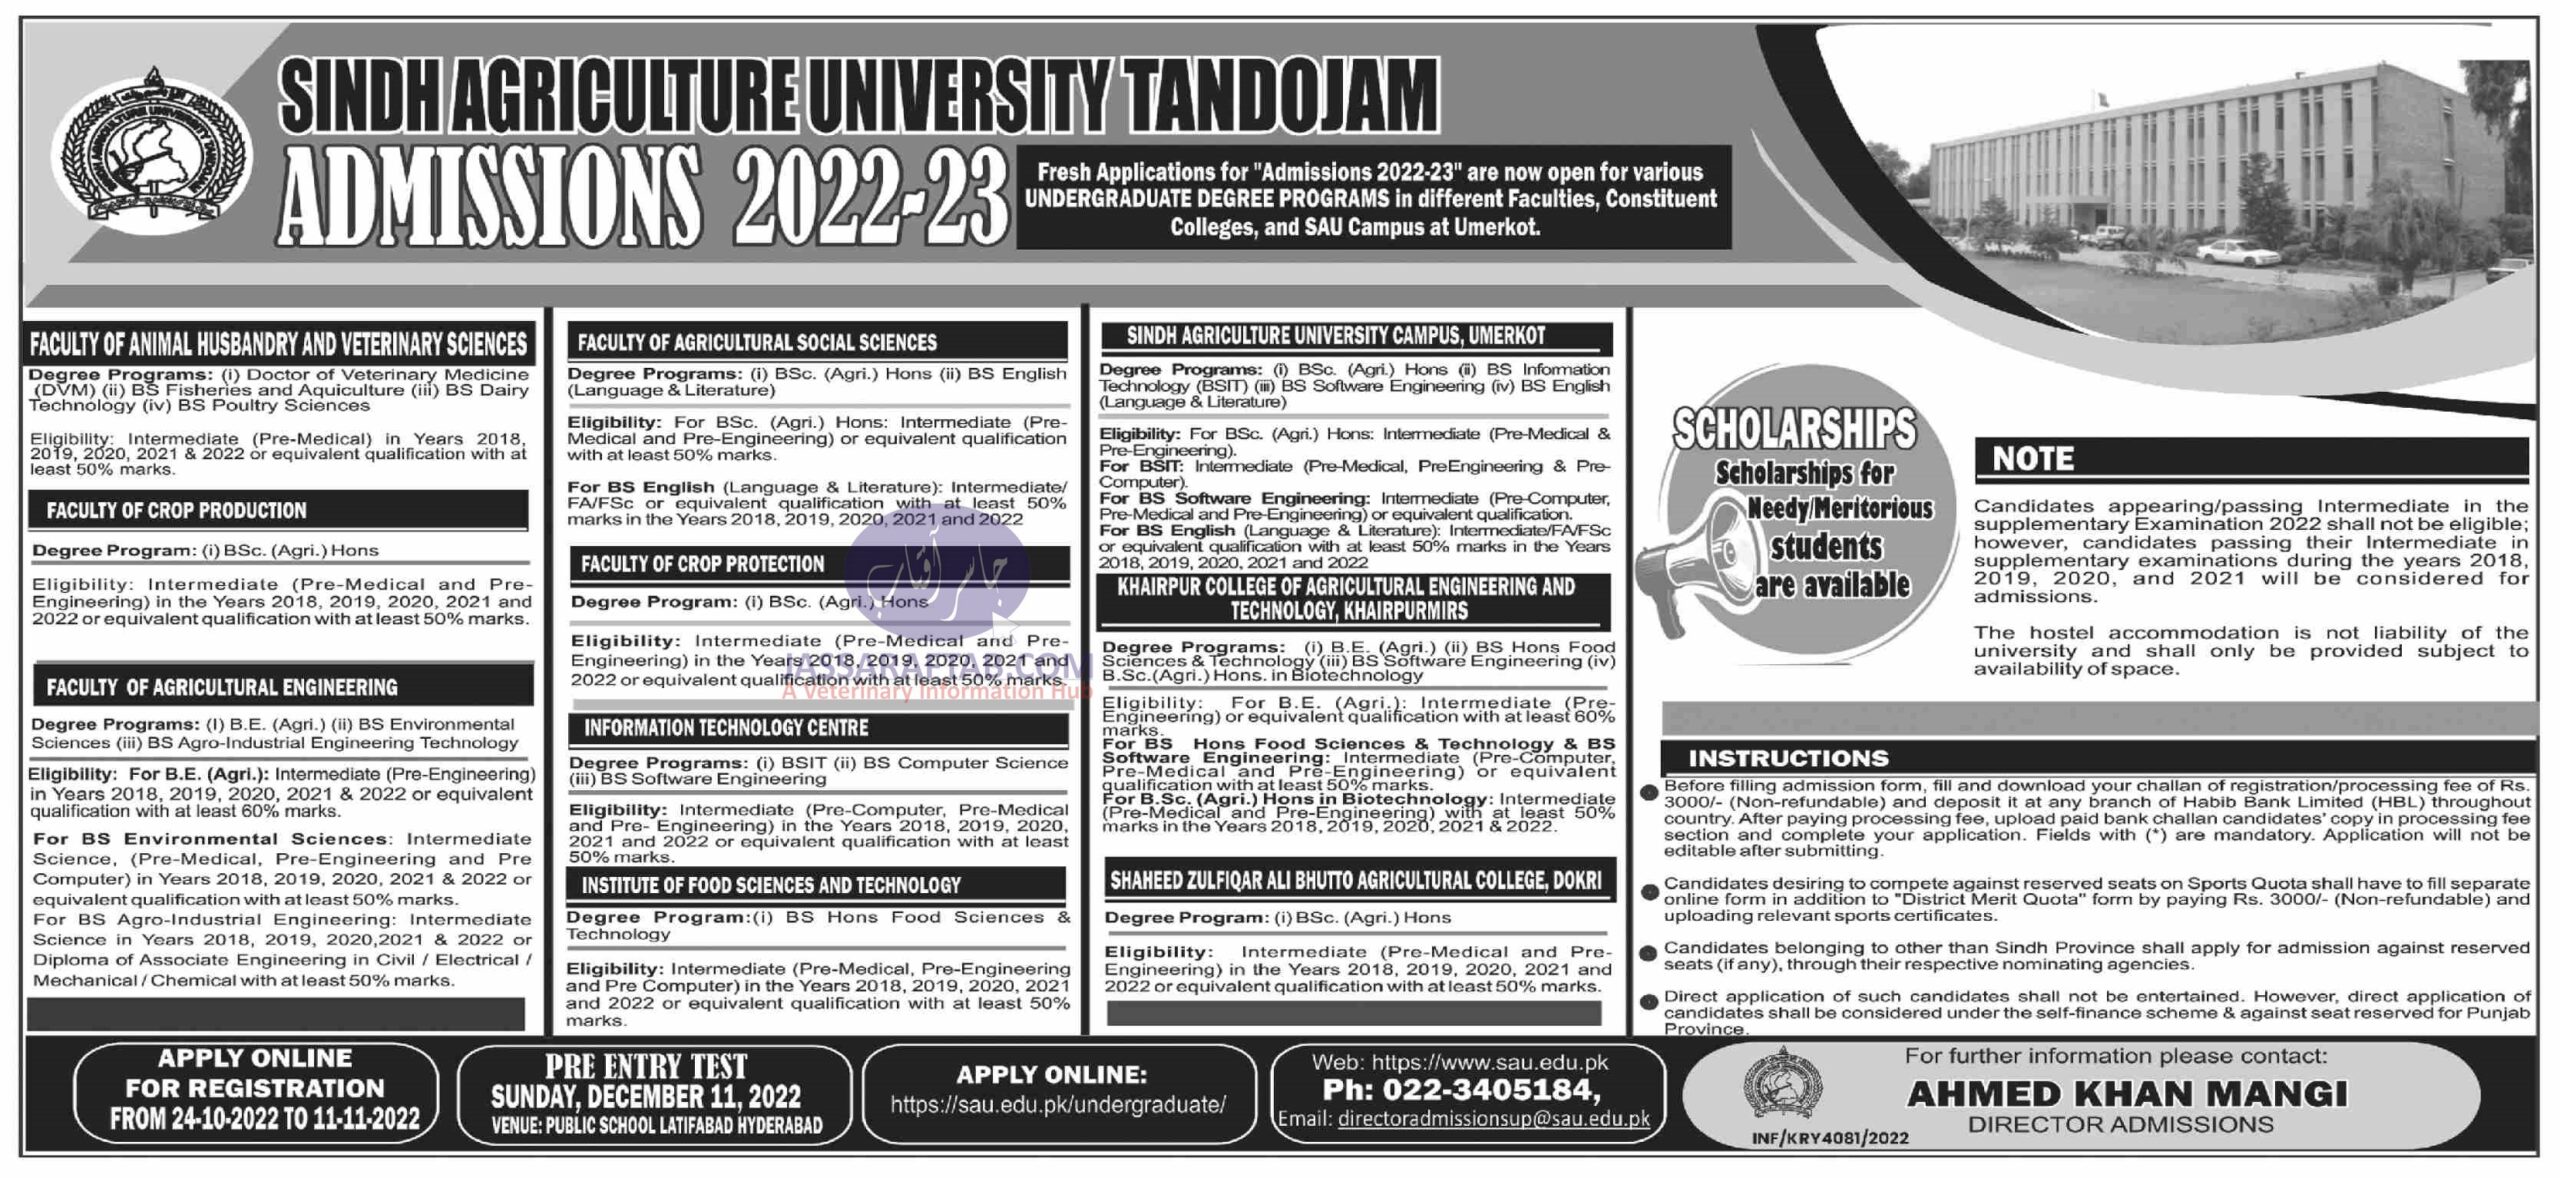 Sindh Agriculture University, Tandojam